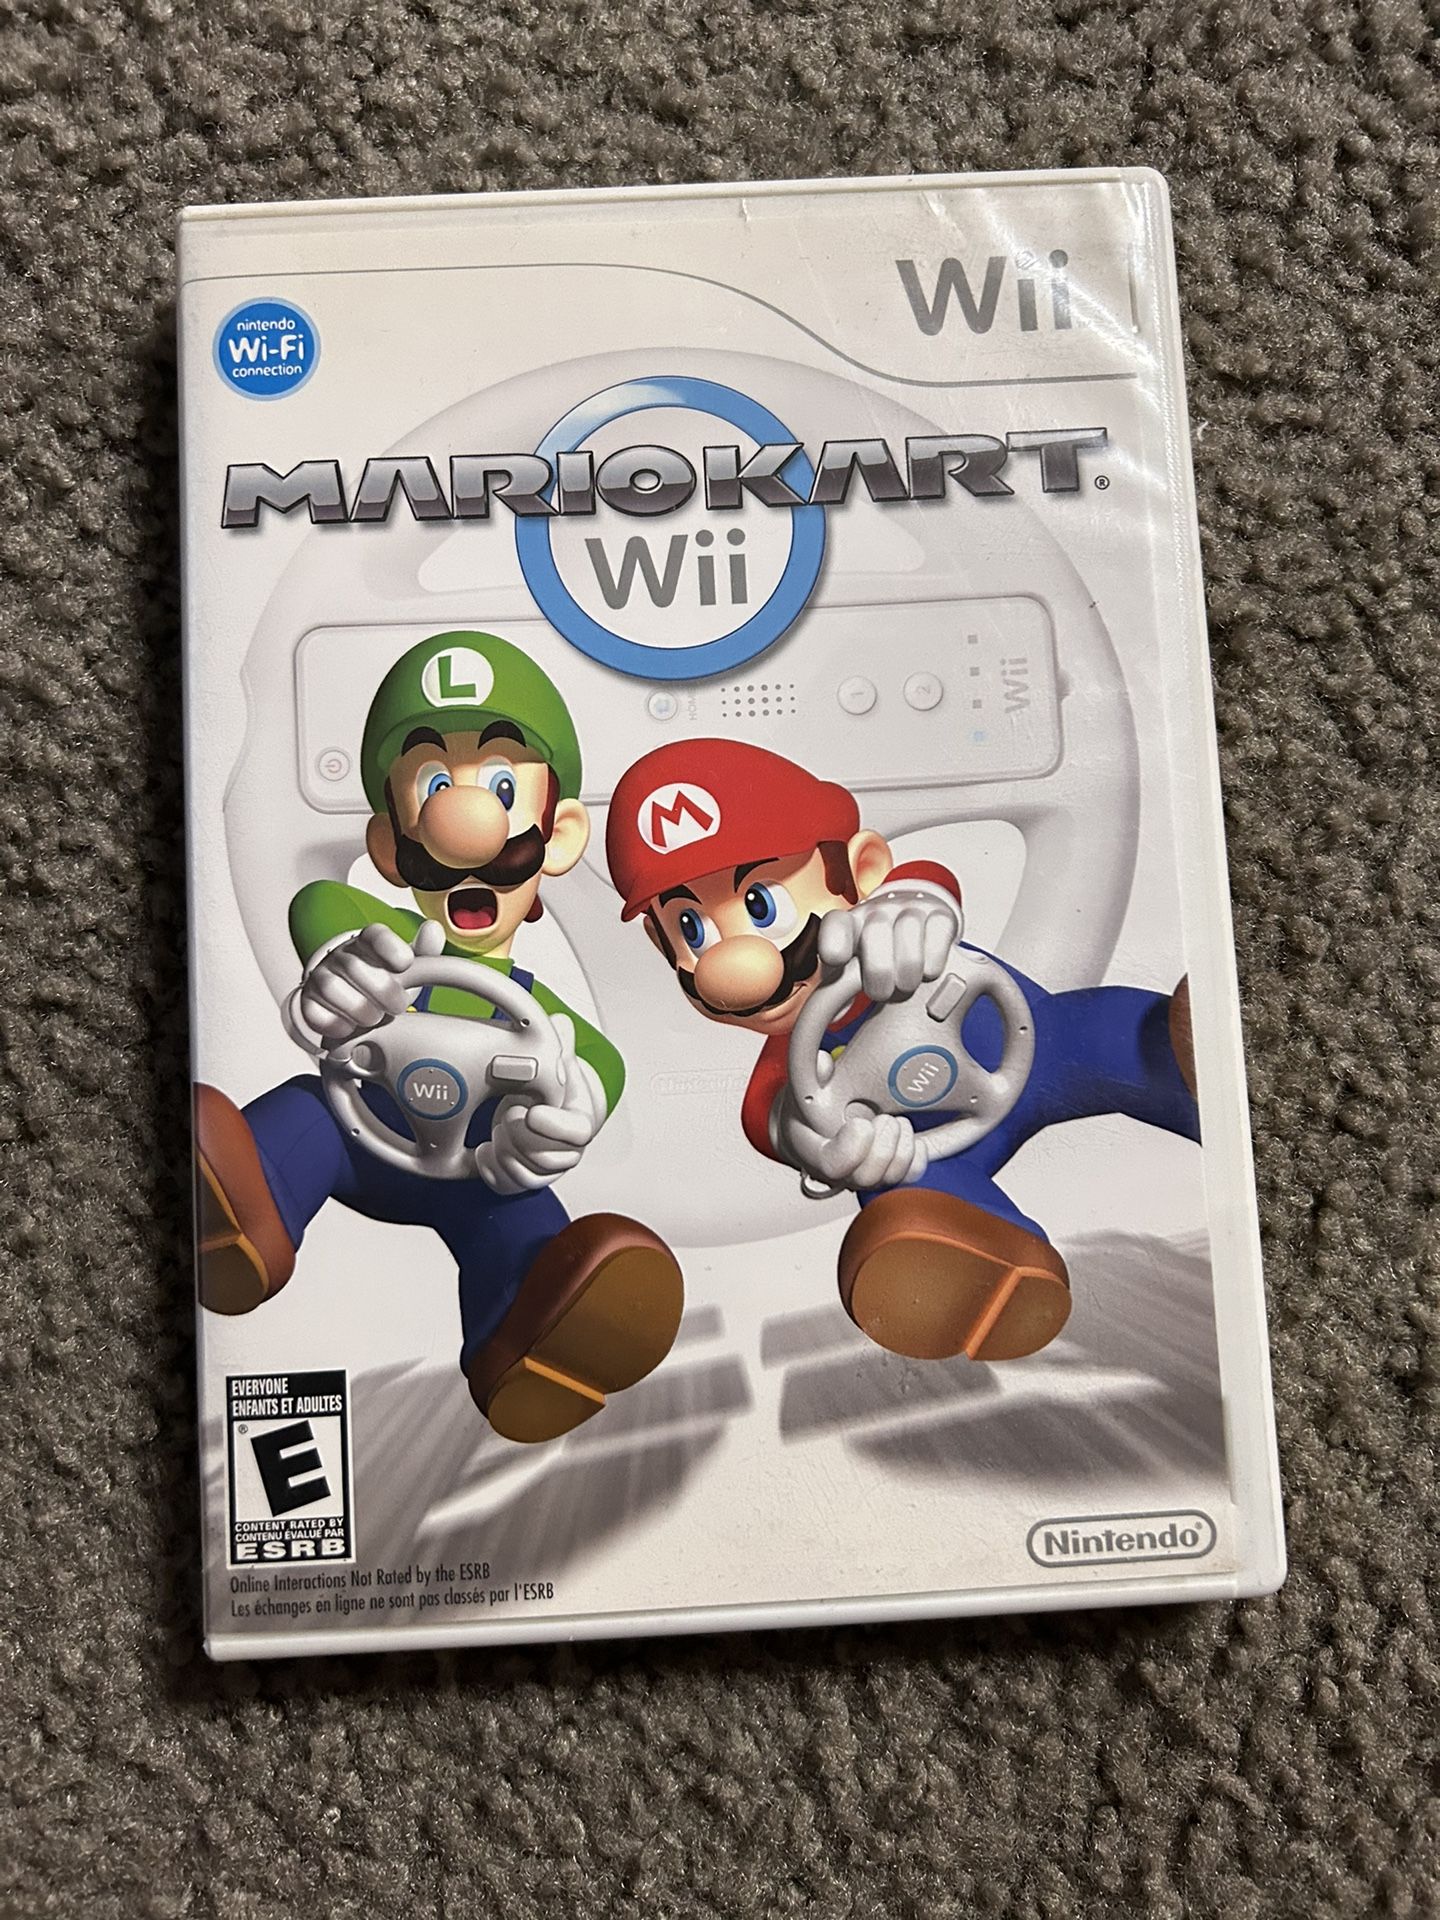 Mario kart Wii Video Game